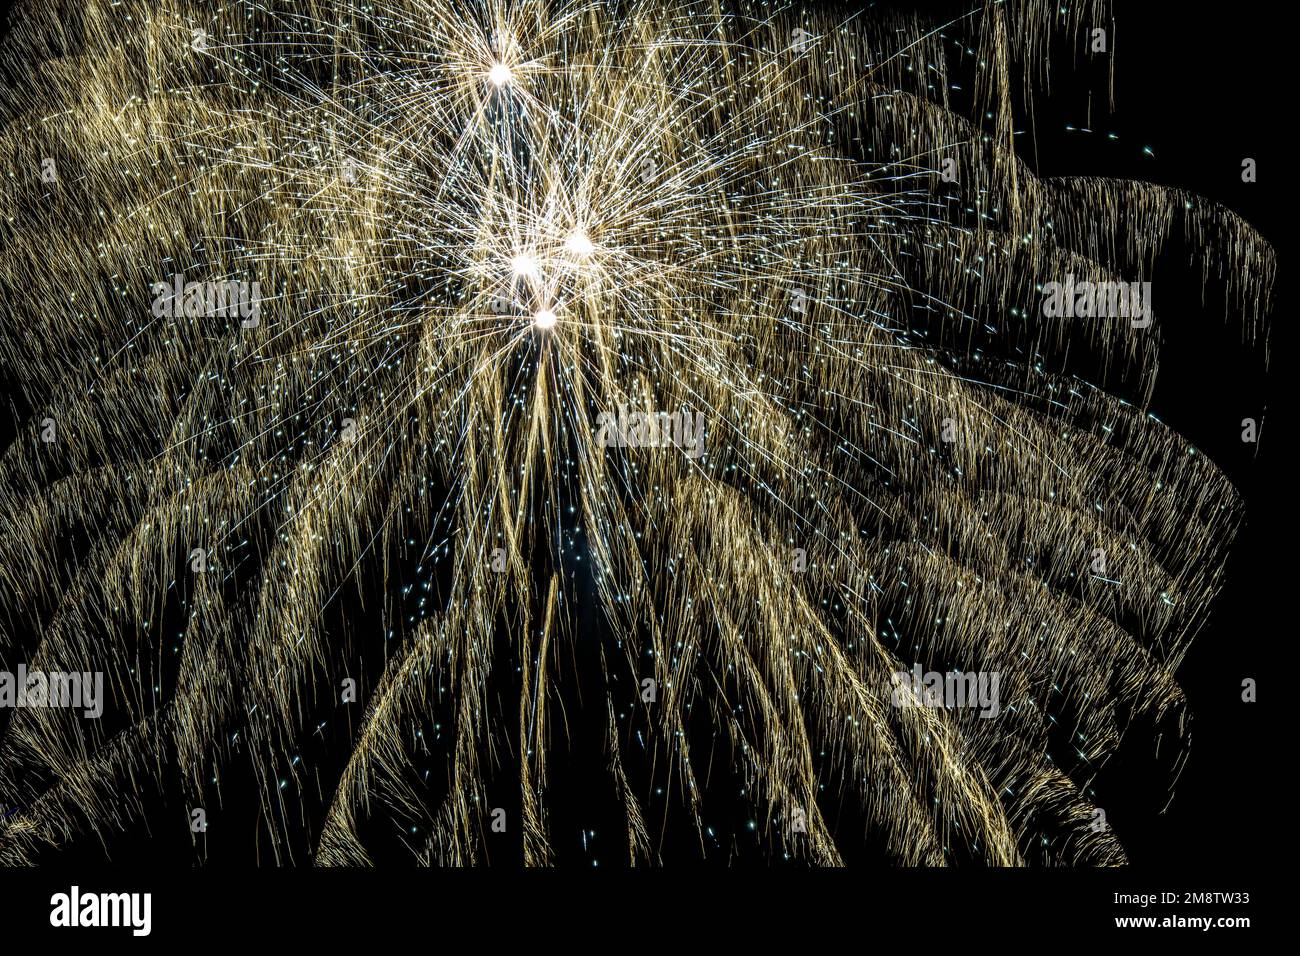 Fireworks exploding in the night sky Stock Photo